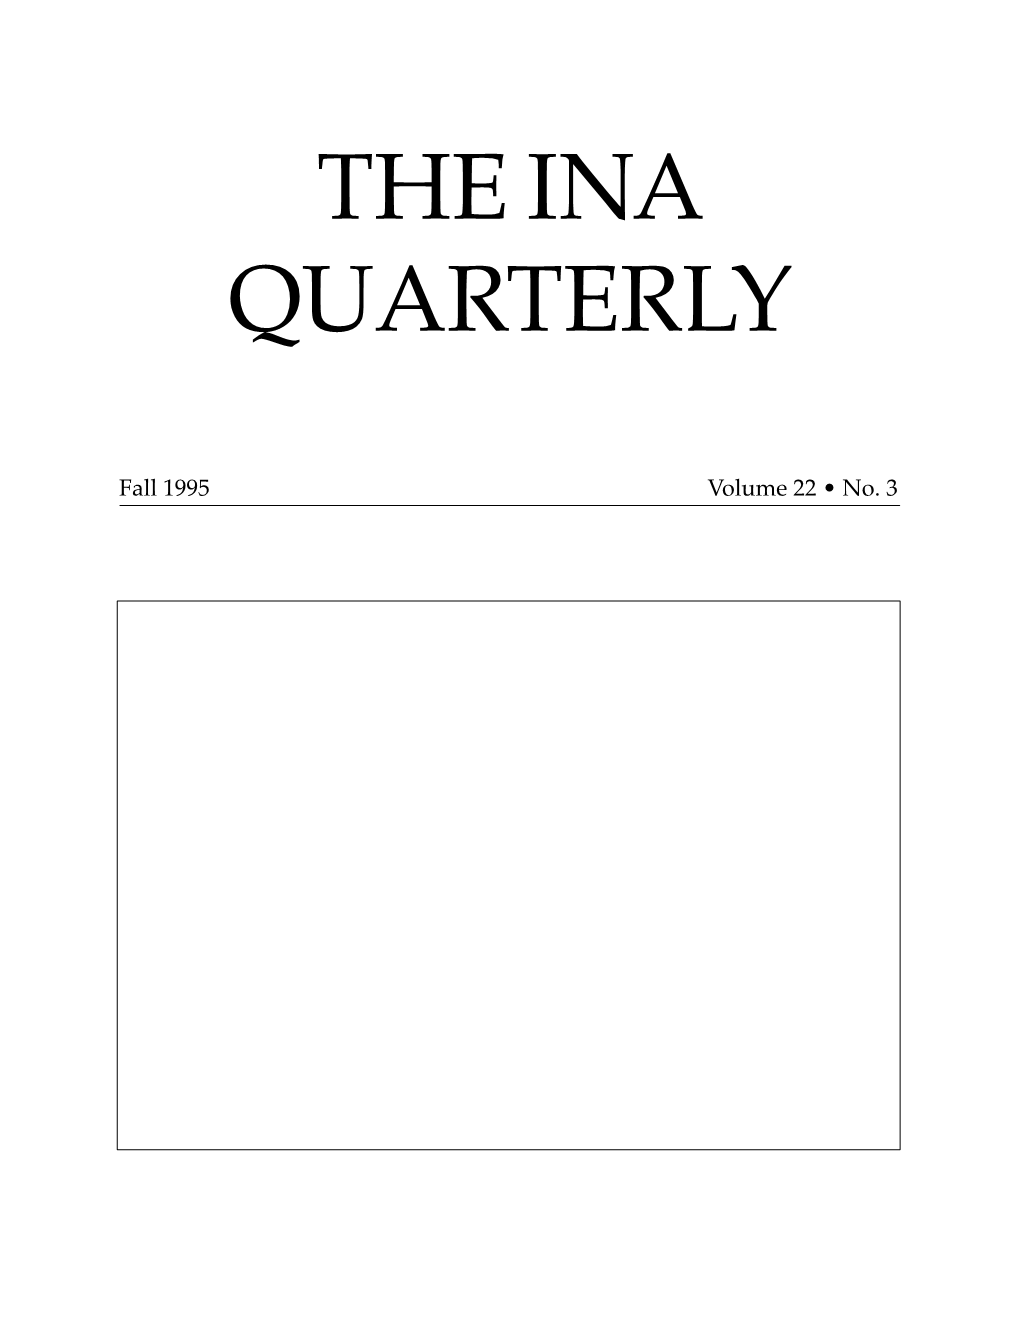 The Ina Quarterly